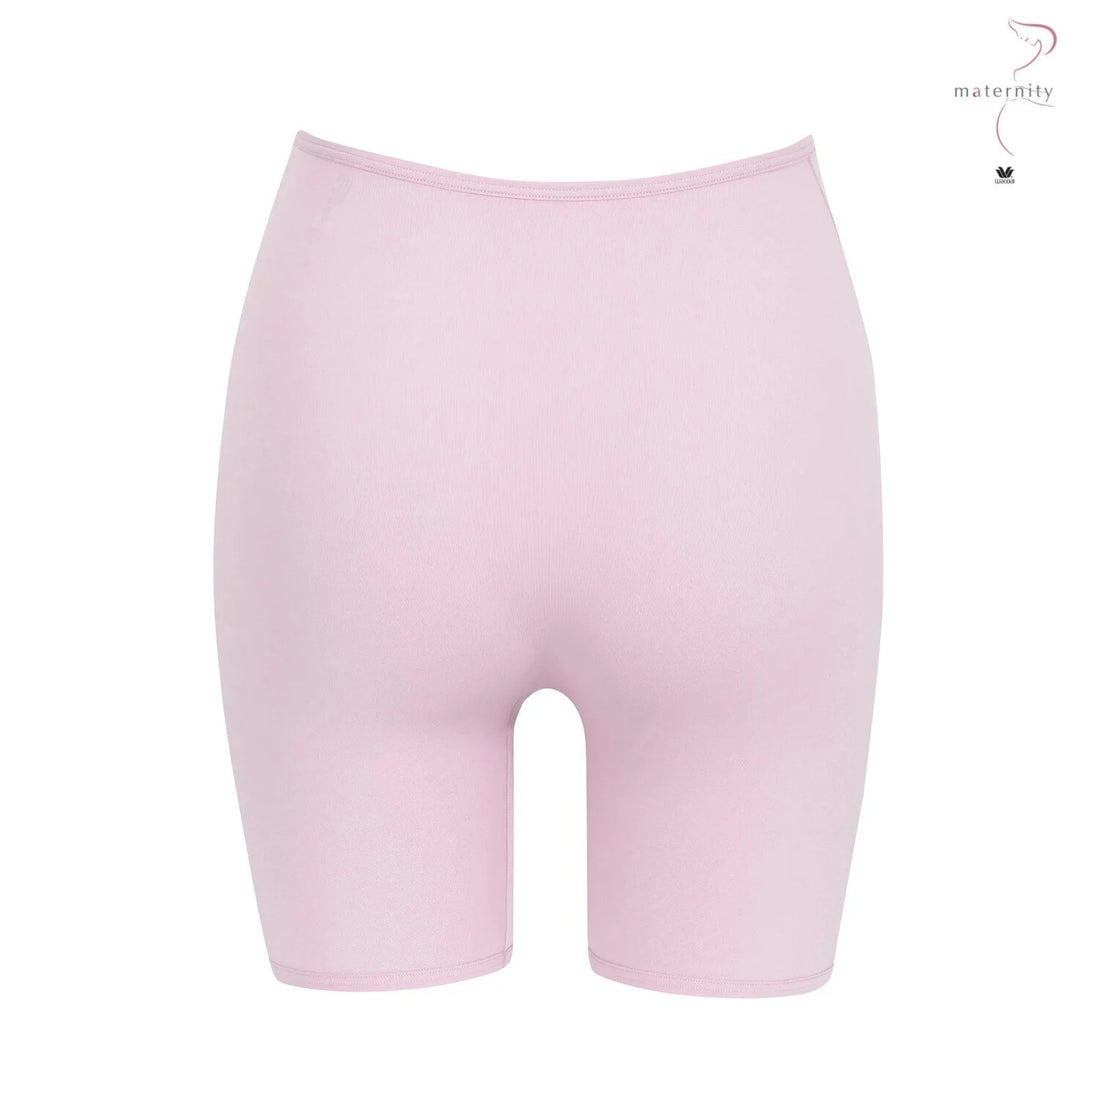 Wacoal Maternity Panty, full body pants, model WM6180, wild rose pink (WR)